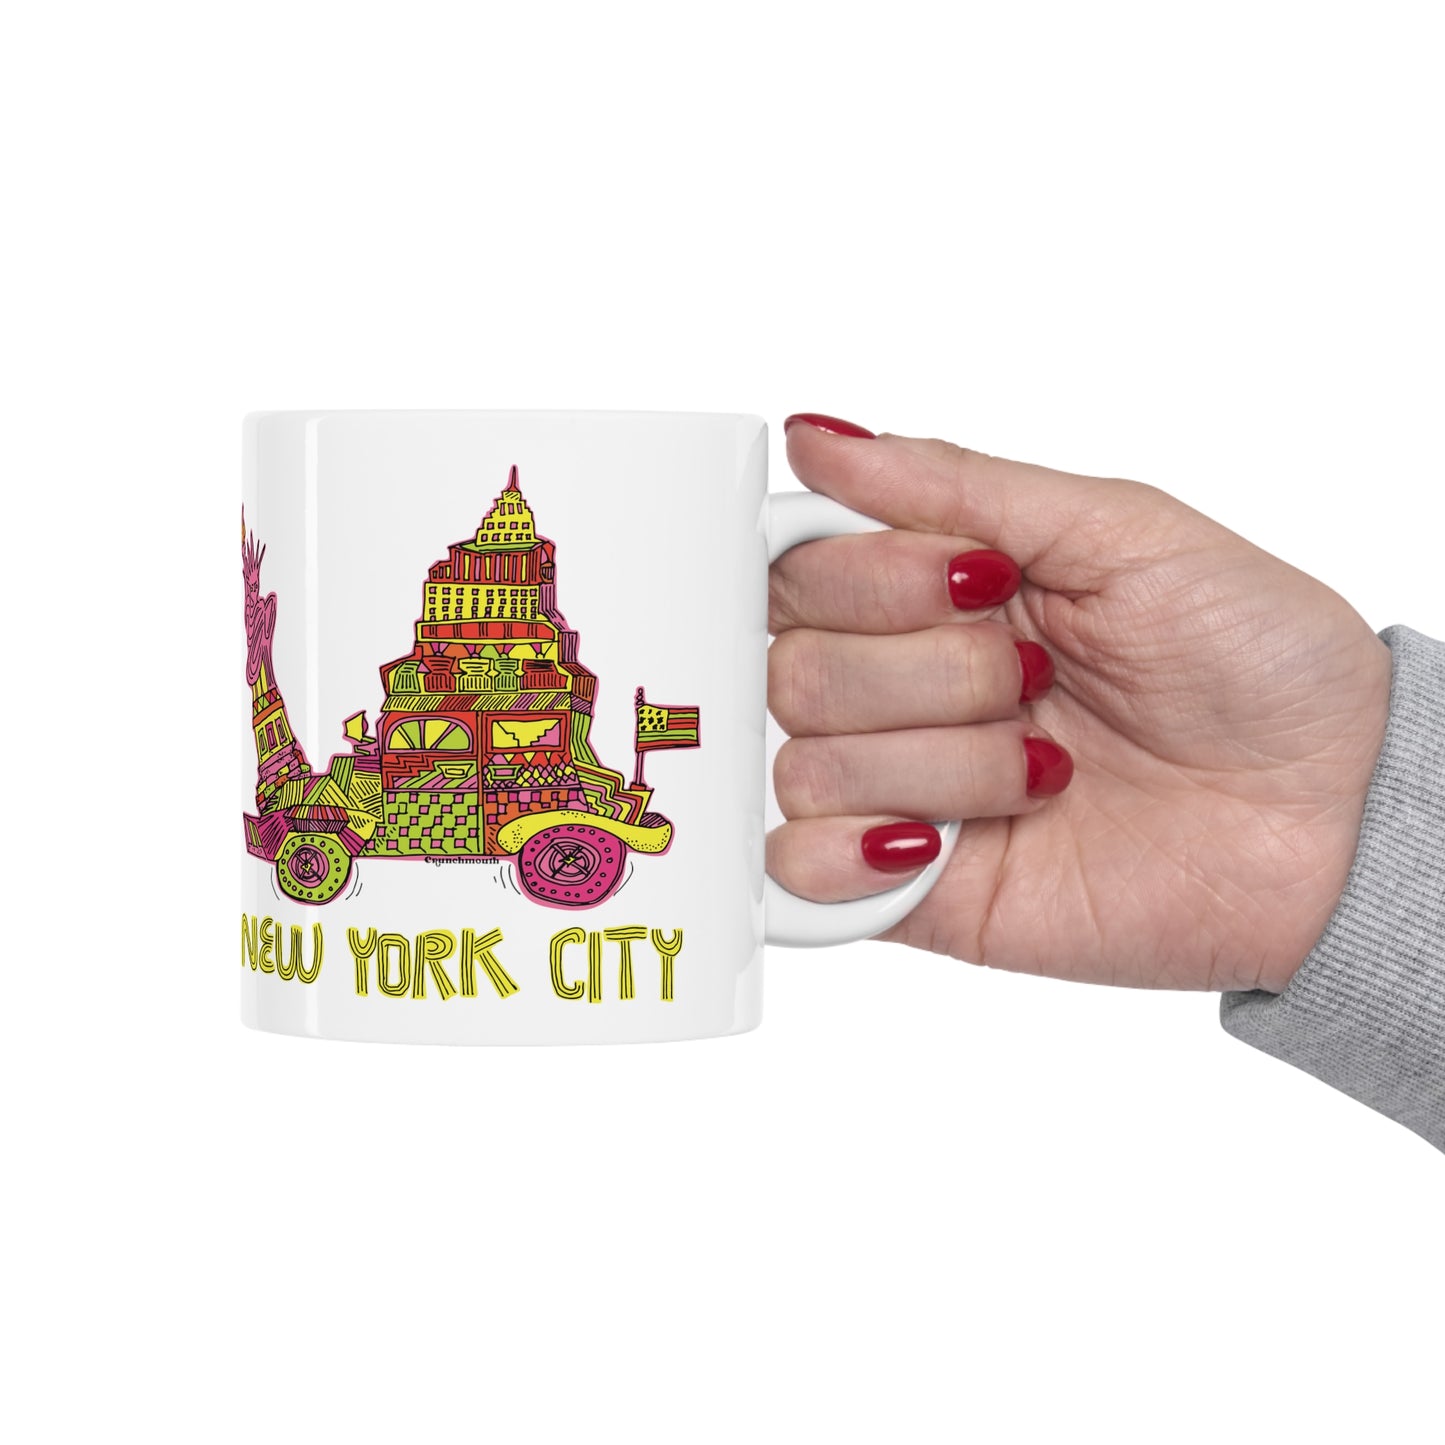 new york city mug displayed in context